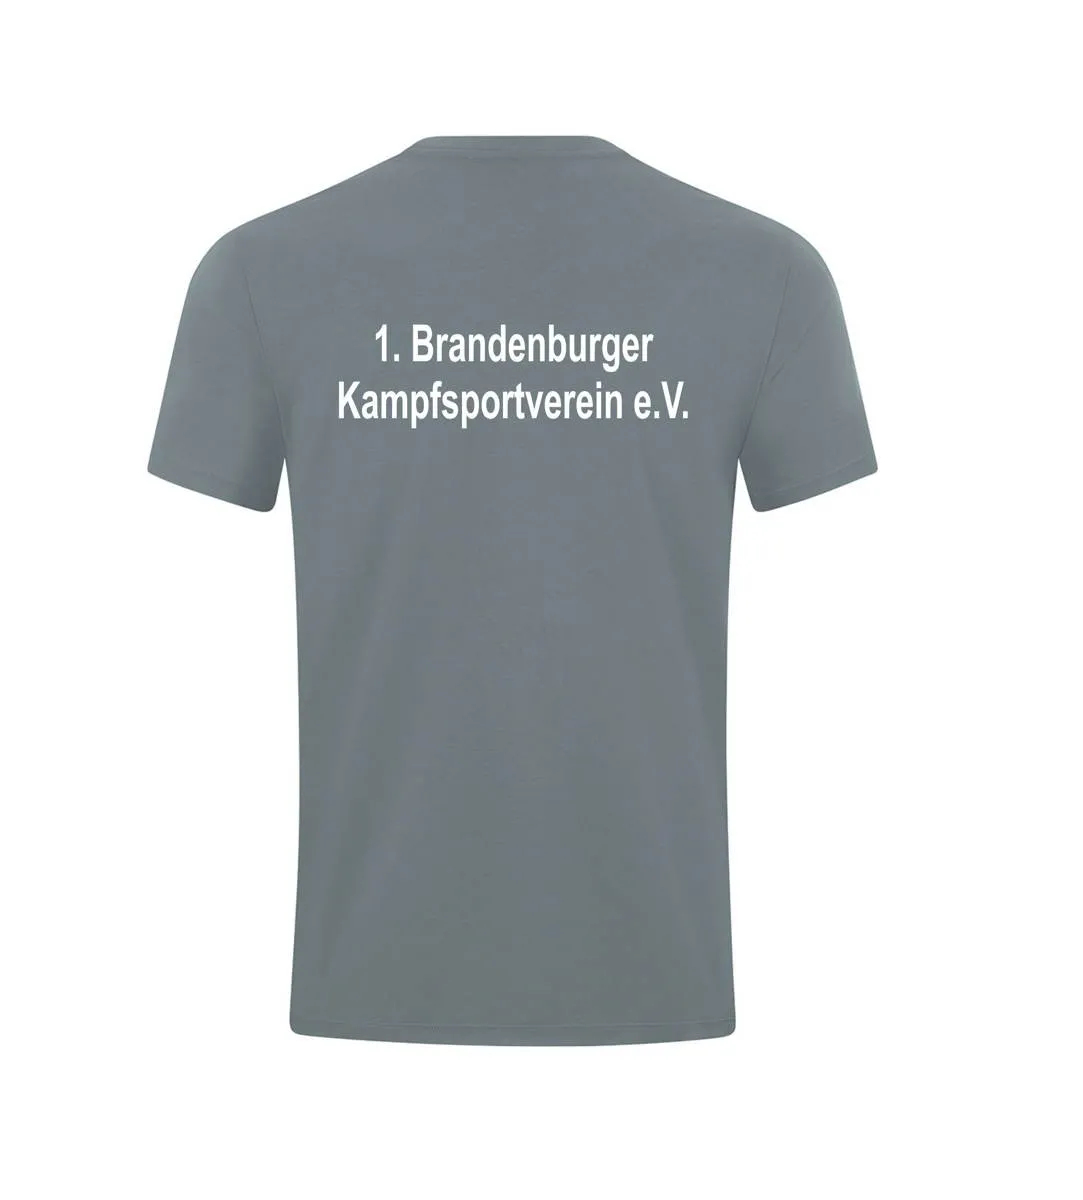 JAKO T-Shirt Power grey Brandenburger Kampfsportverein